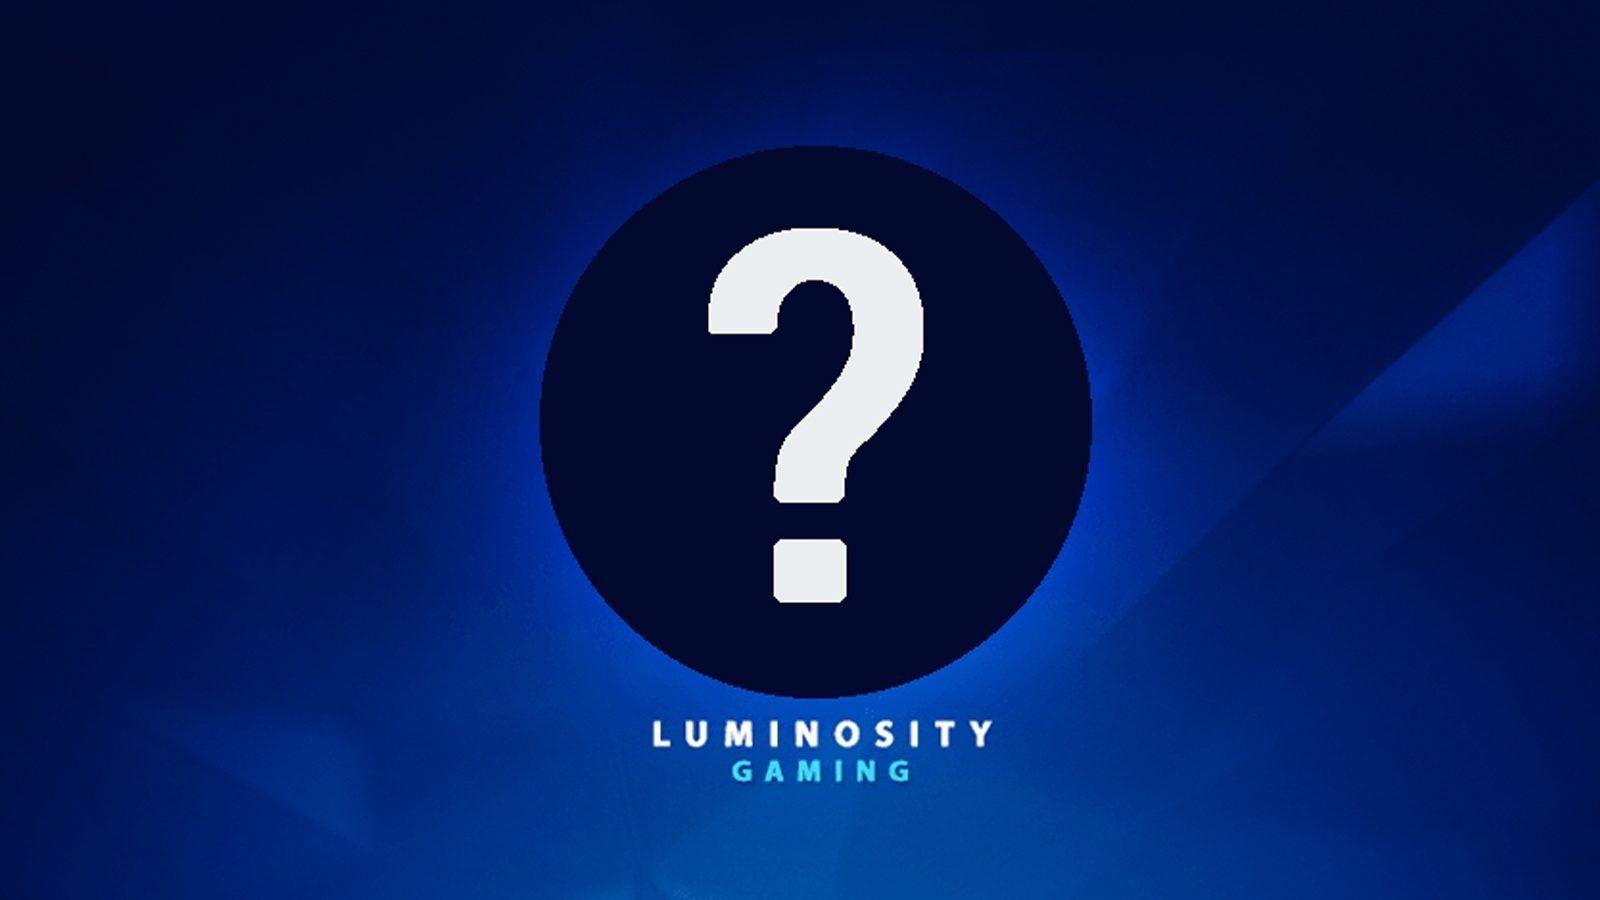 Lumminosity Logo - Luminosity Gaming Updates Their Logo for 2018